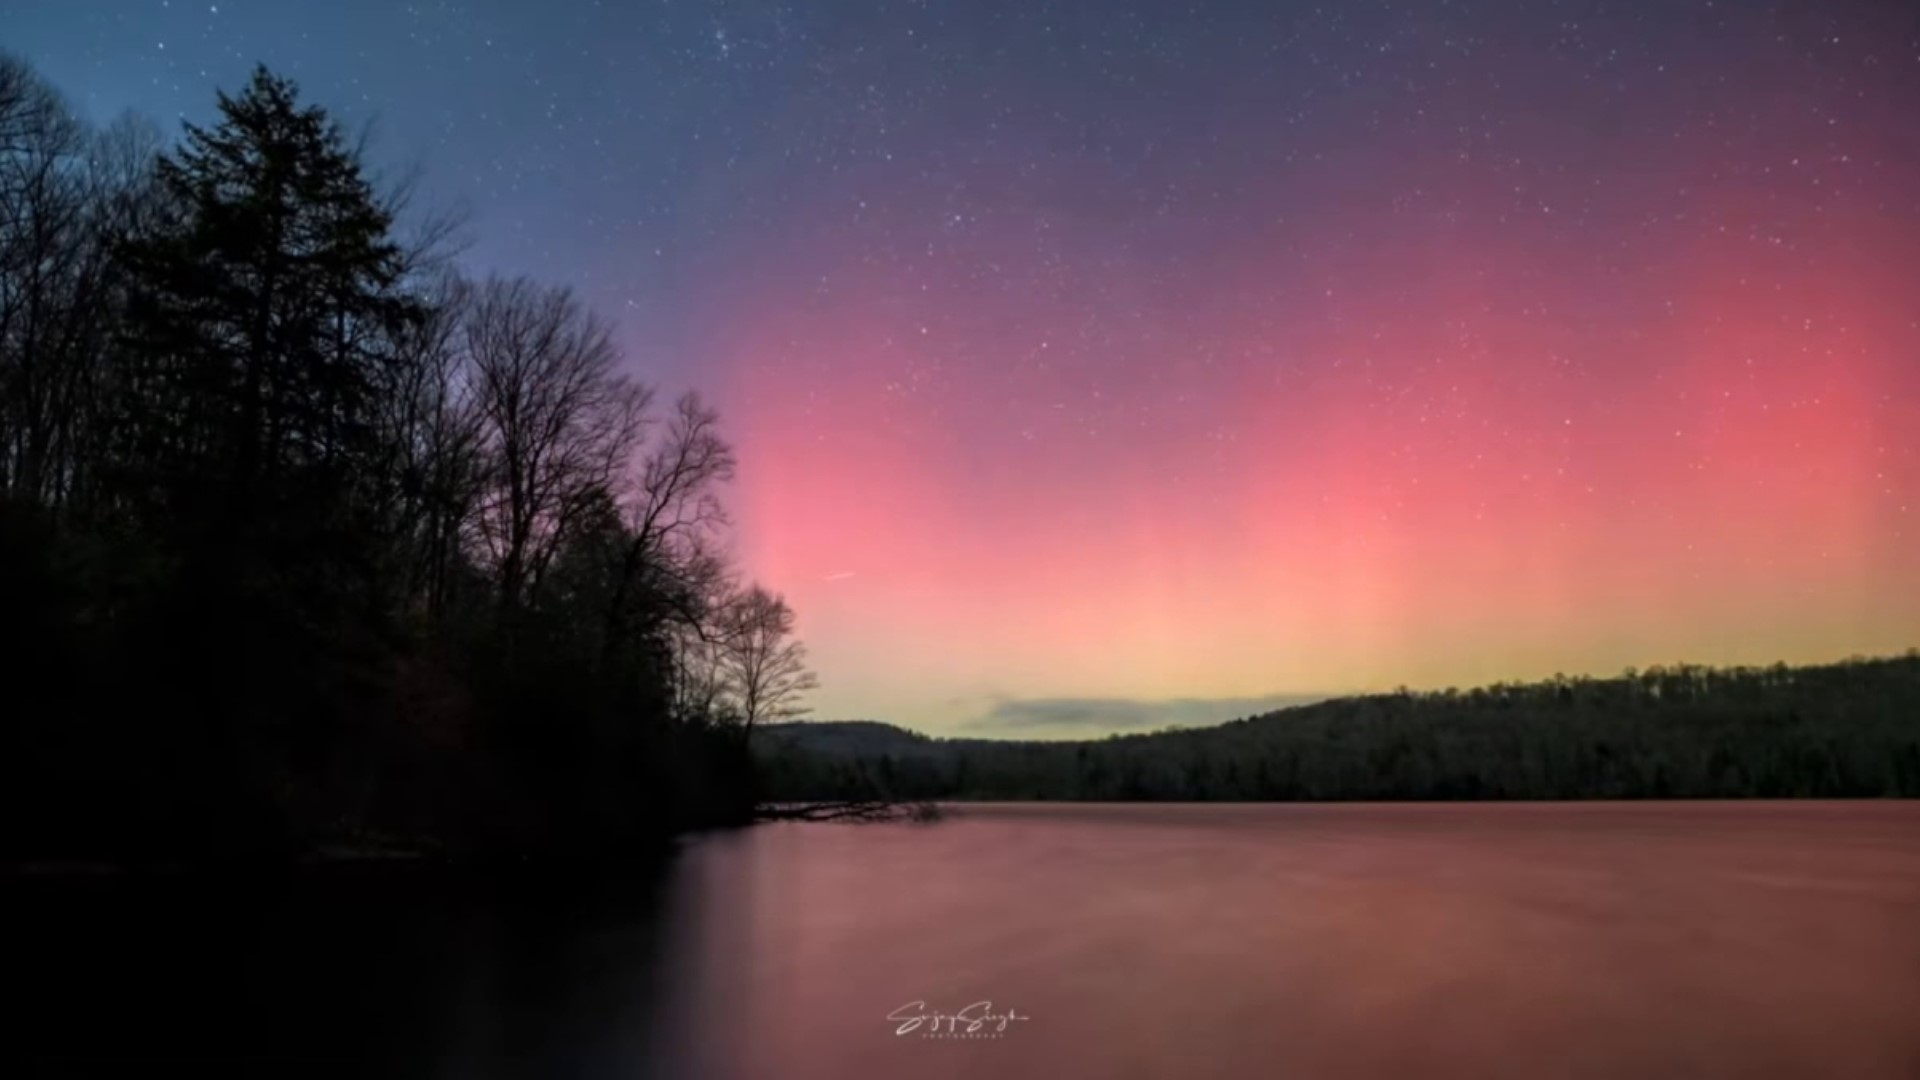 Northern Lights seen in Pennsylvania